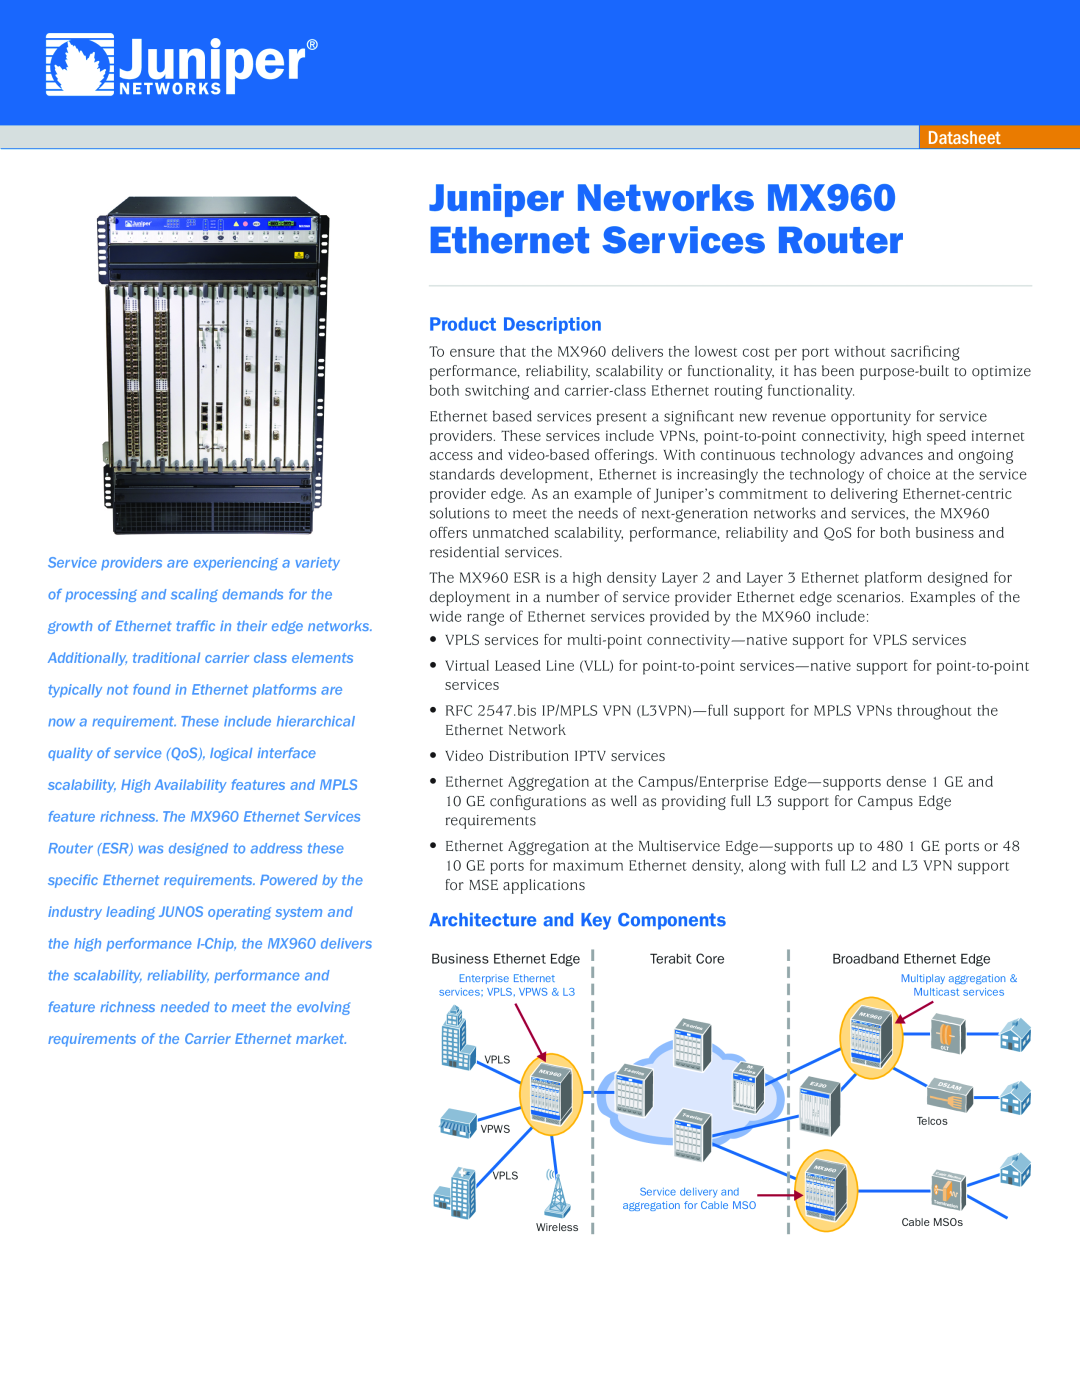 Juniper Networks MX960 manual Product Description, Architecture and Key Components, Datasheet 